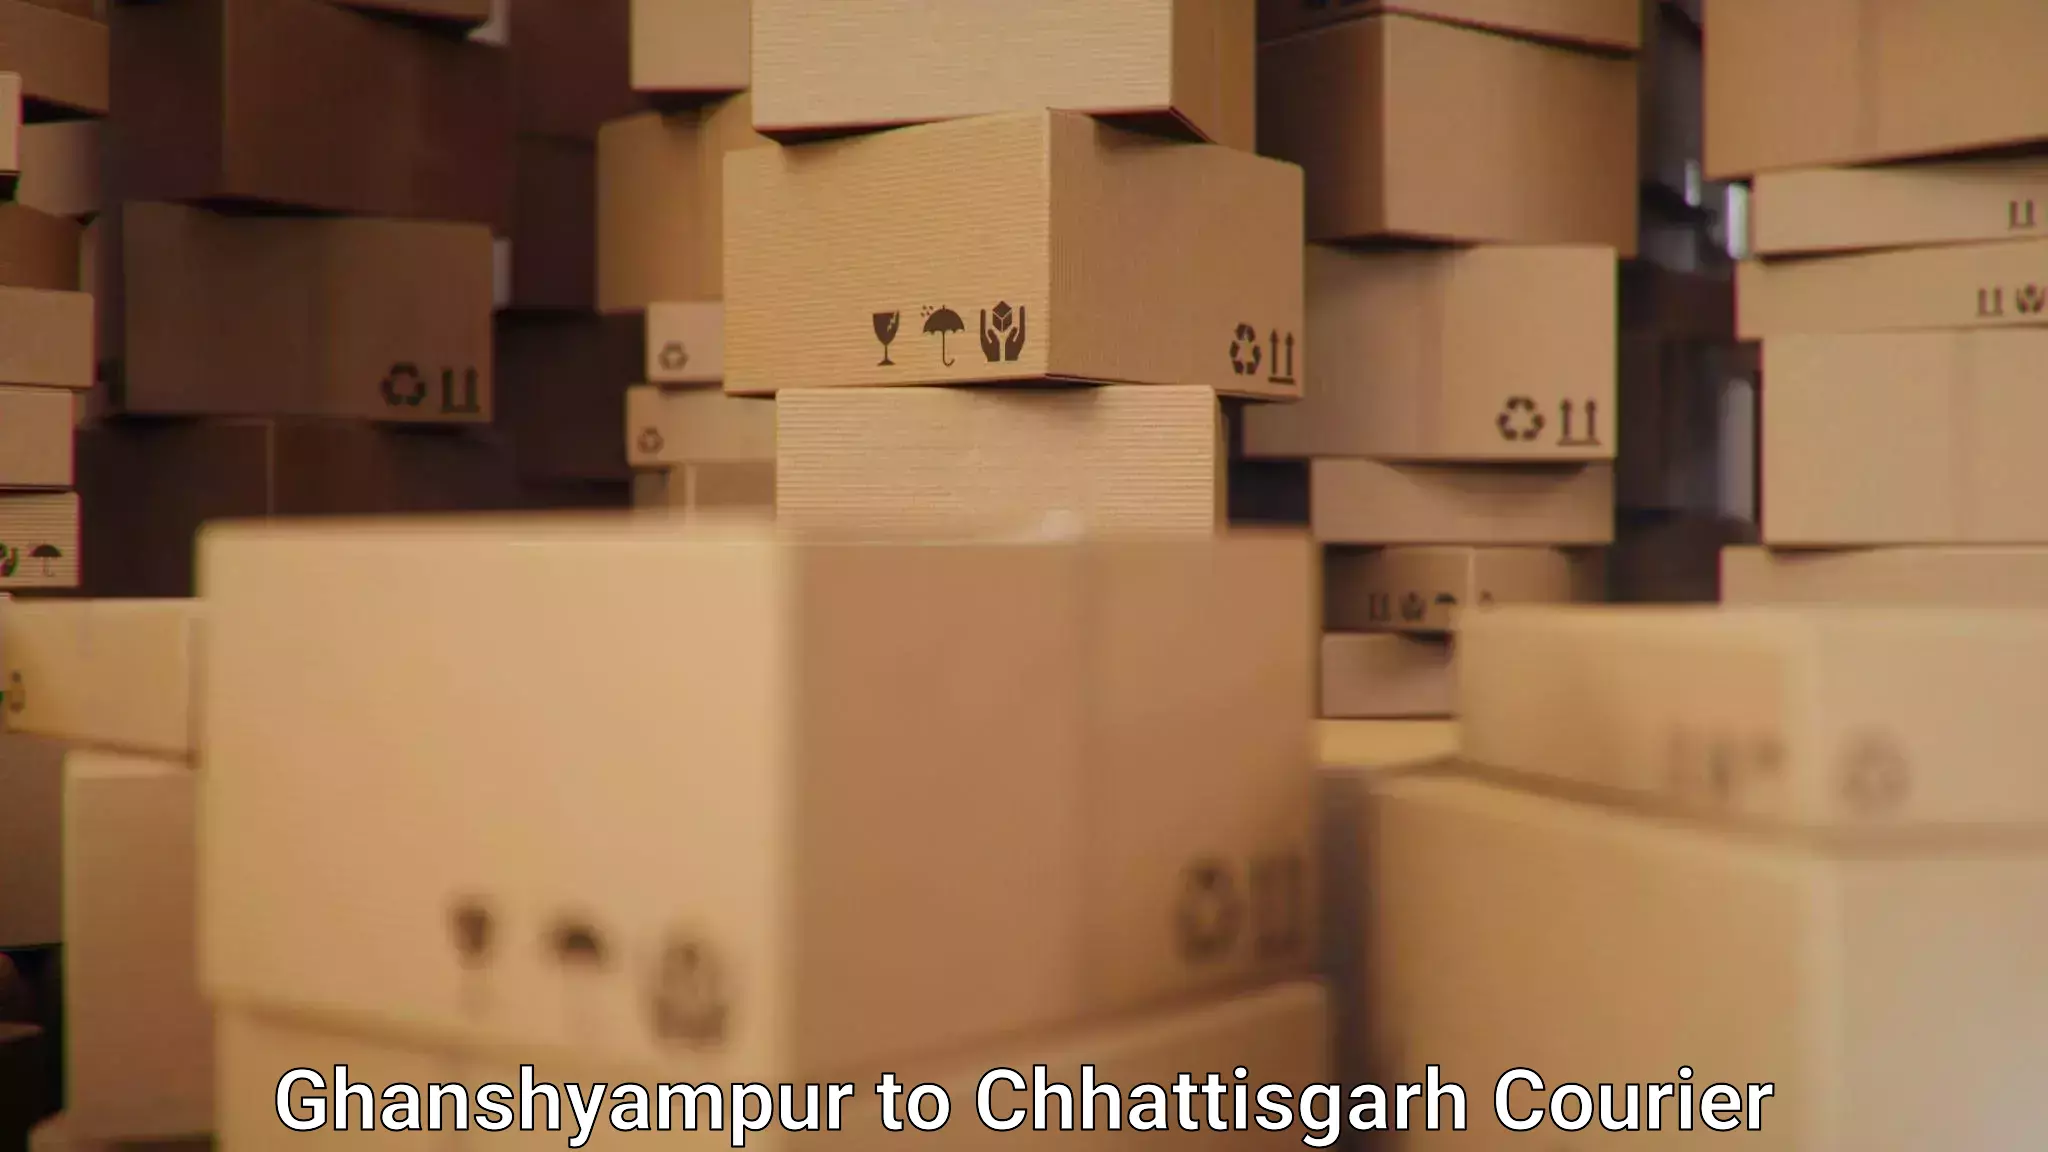 Courier service efficiency Ghanshyampur to Raipur